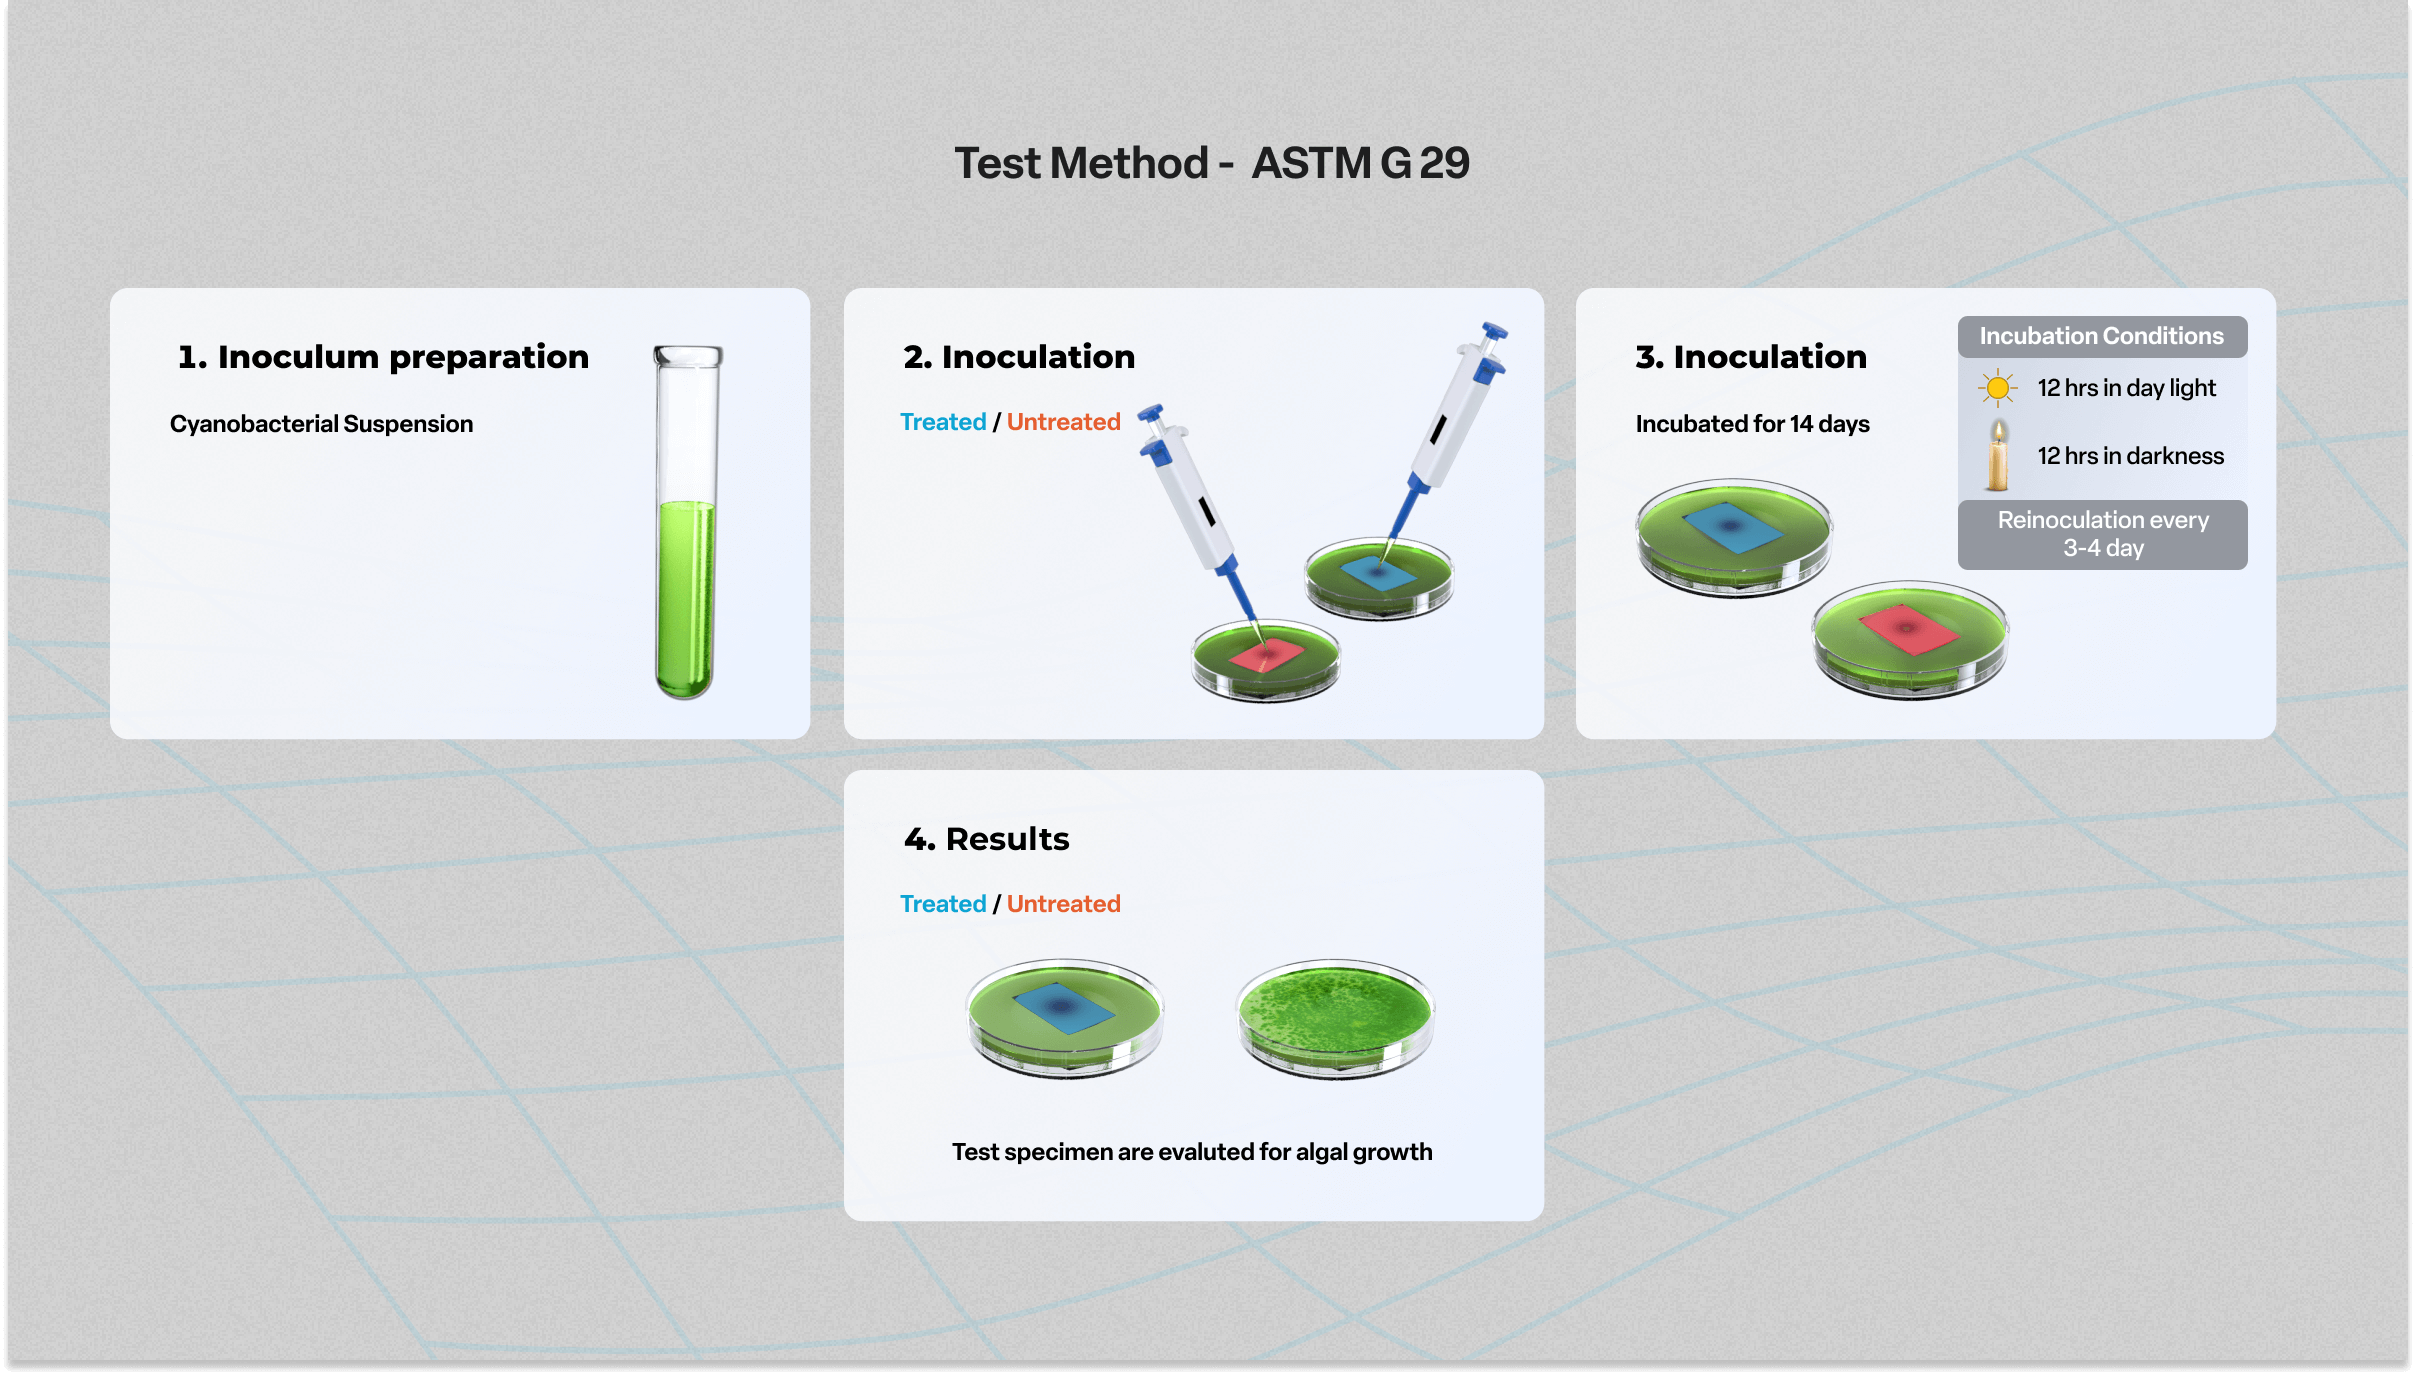 ASTM G29 Test Method